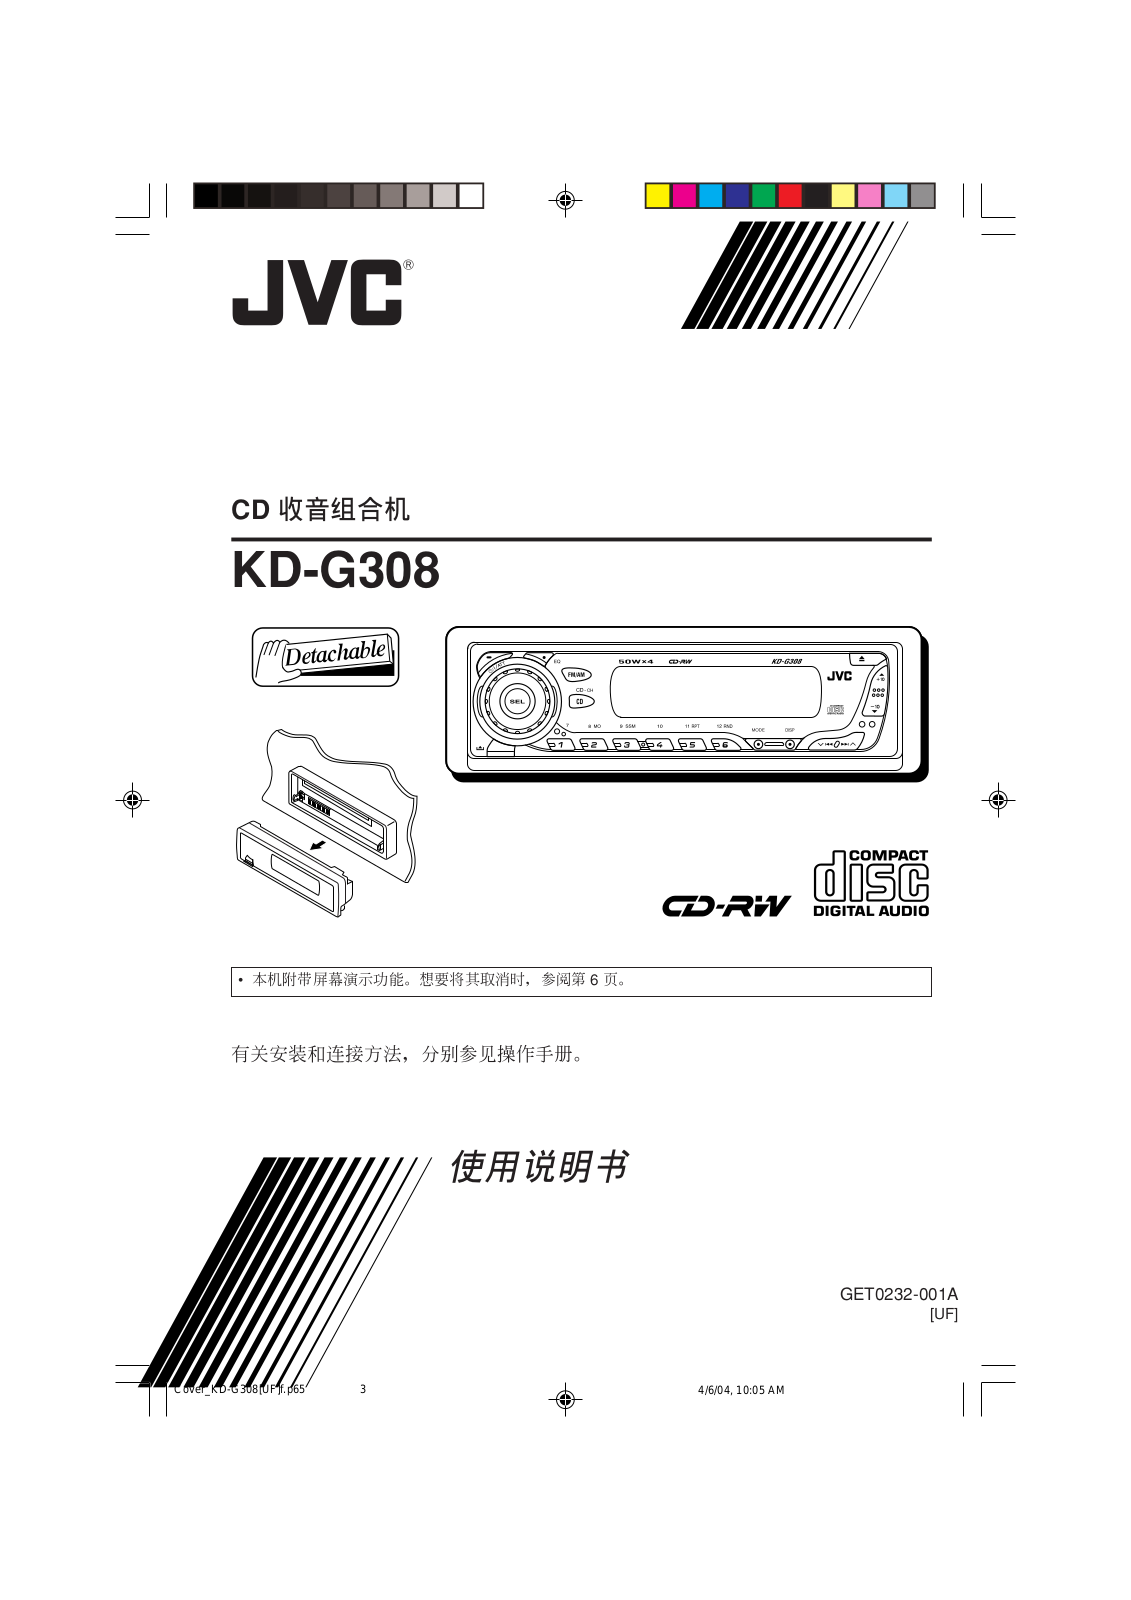 JVC KD-G308 User Manual